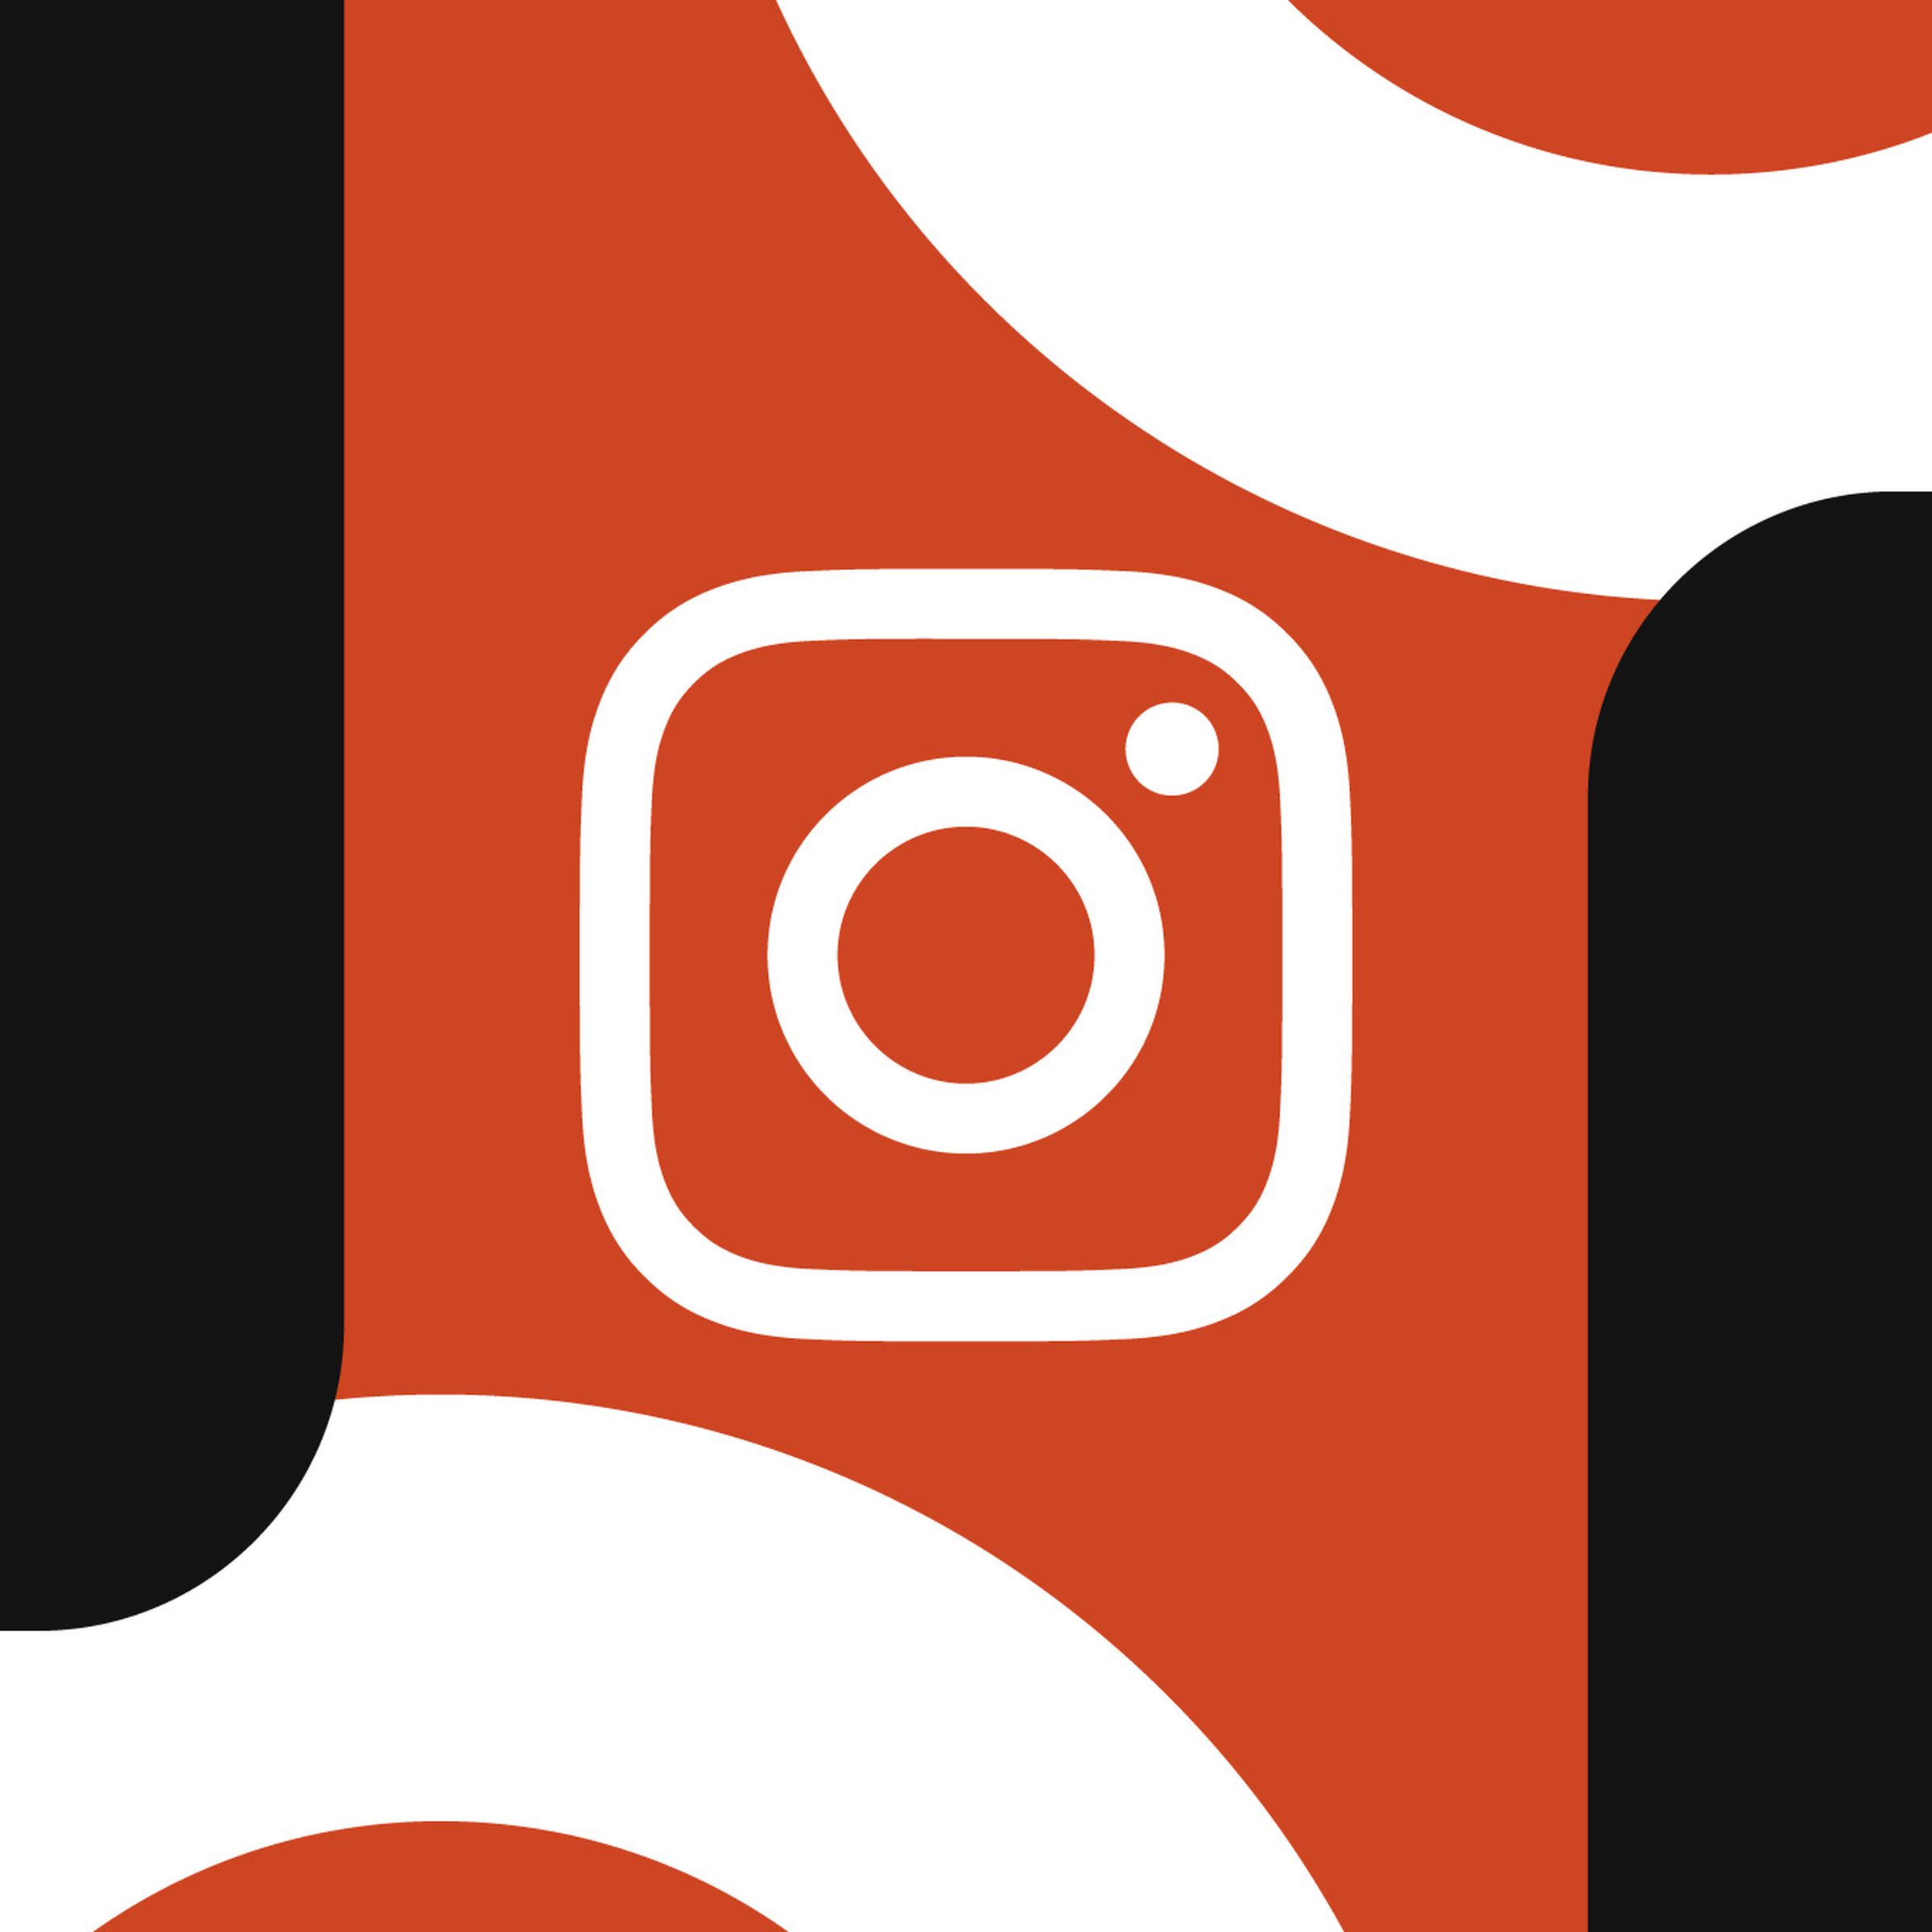 Instagram logo with geometric design background